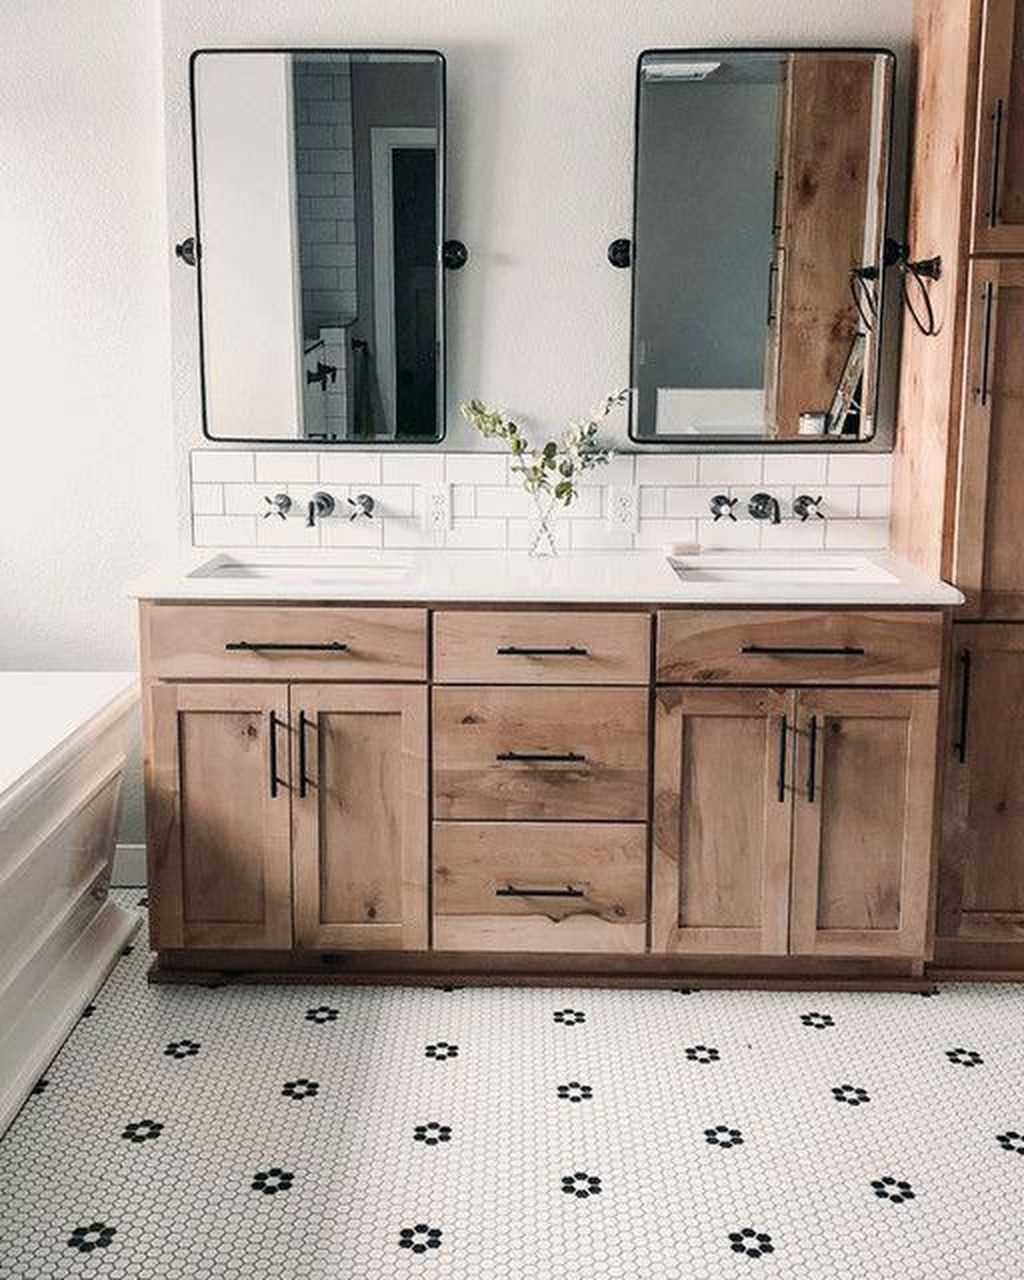 Unordinary Bathroom Design Ideas With Stunning Wood Shades 29